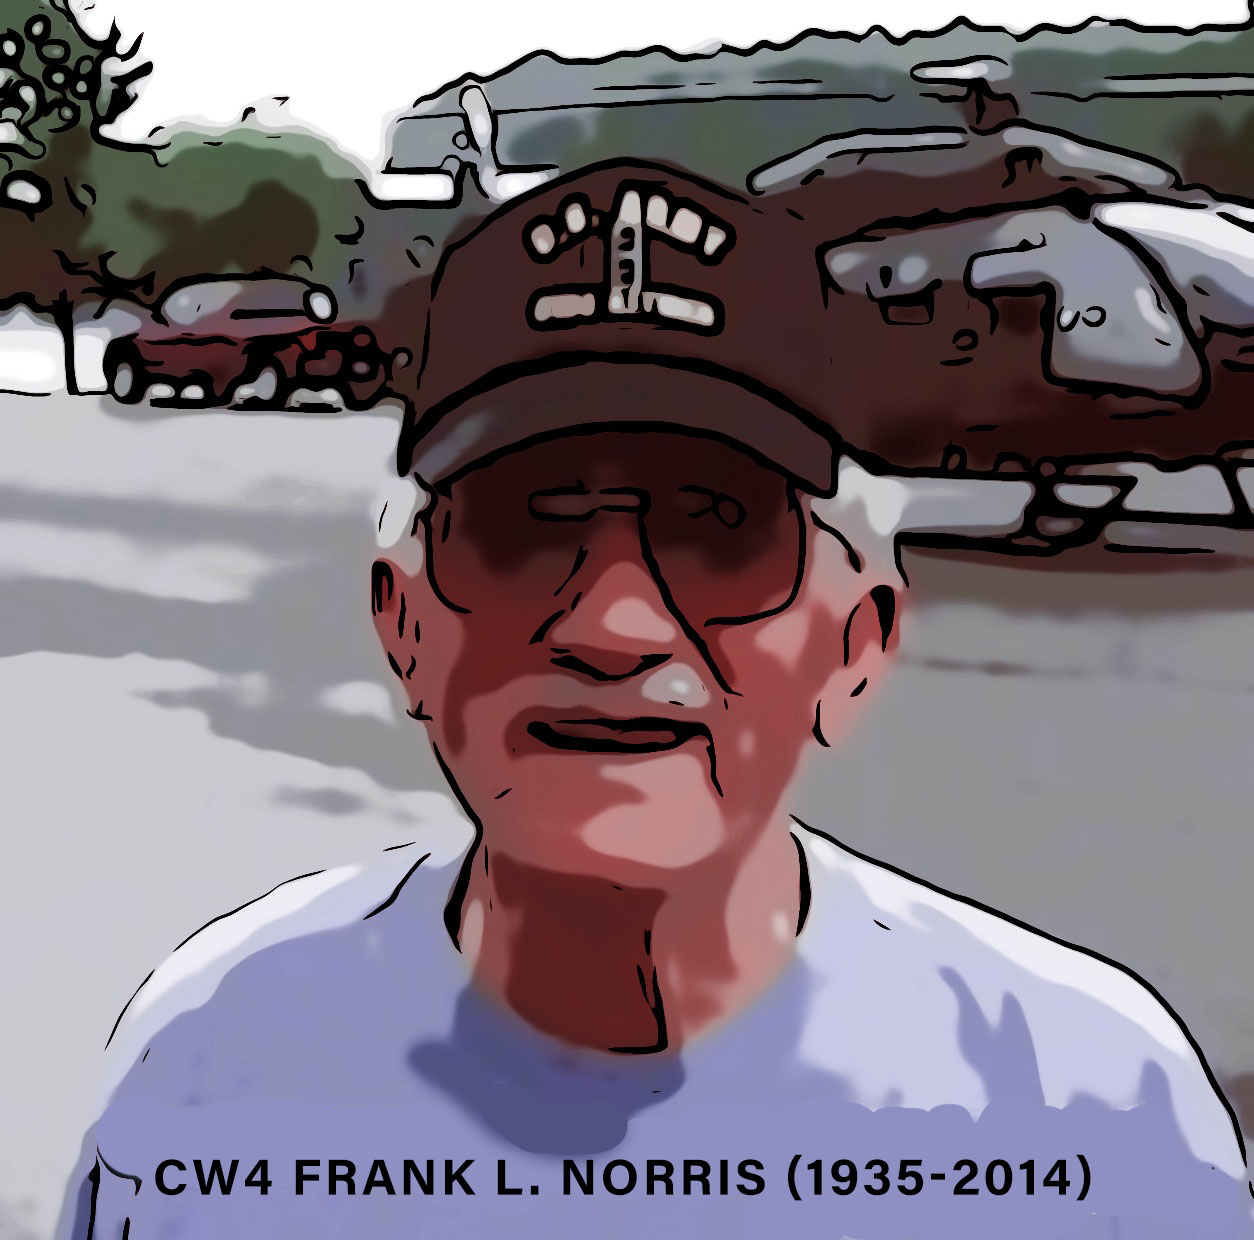 Frank “Chief” Norris